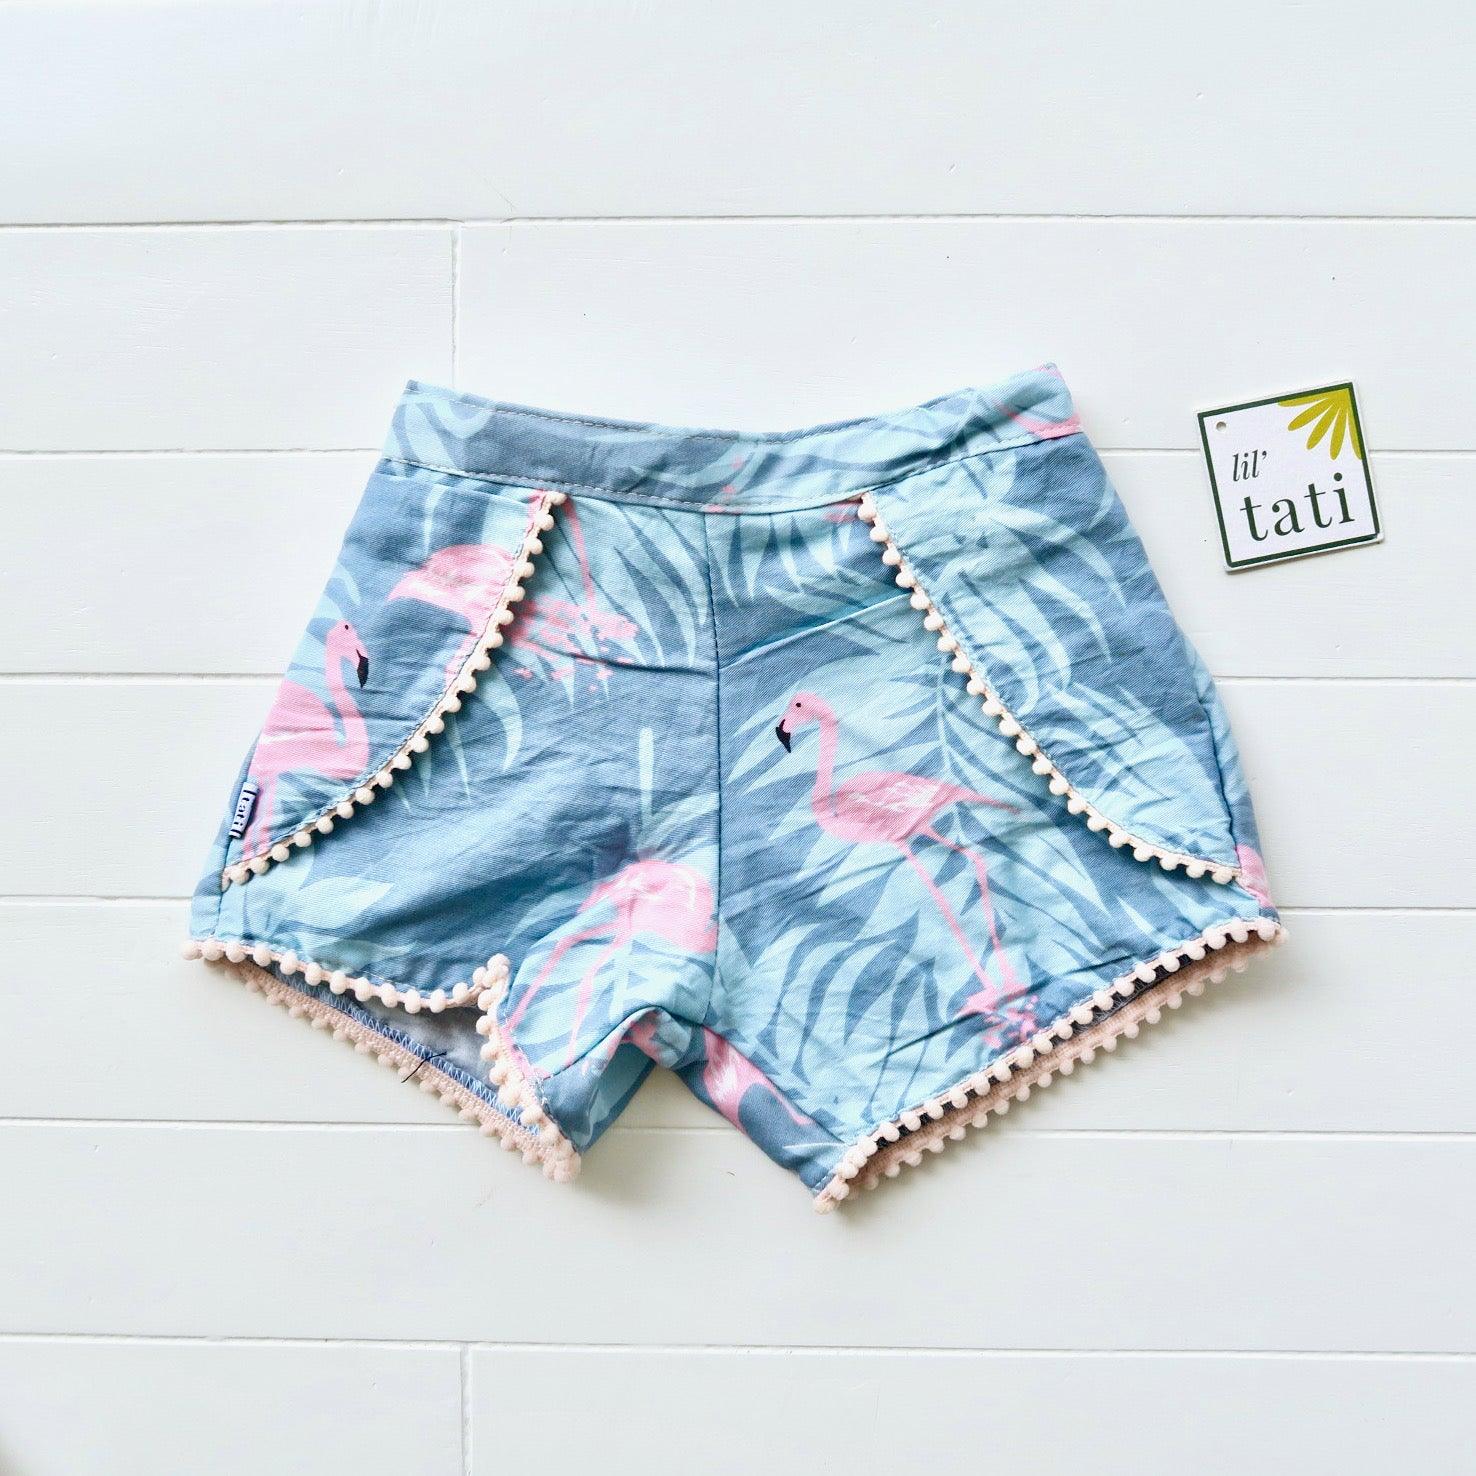 Pompom Shorts in Flamingo Summer Pink Pompom - Lil' Tati